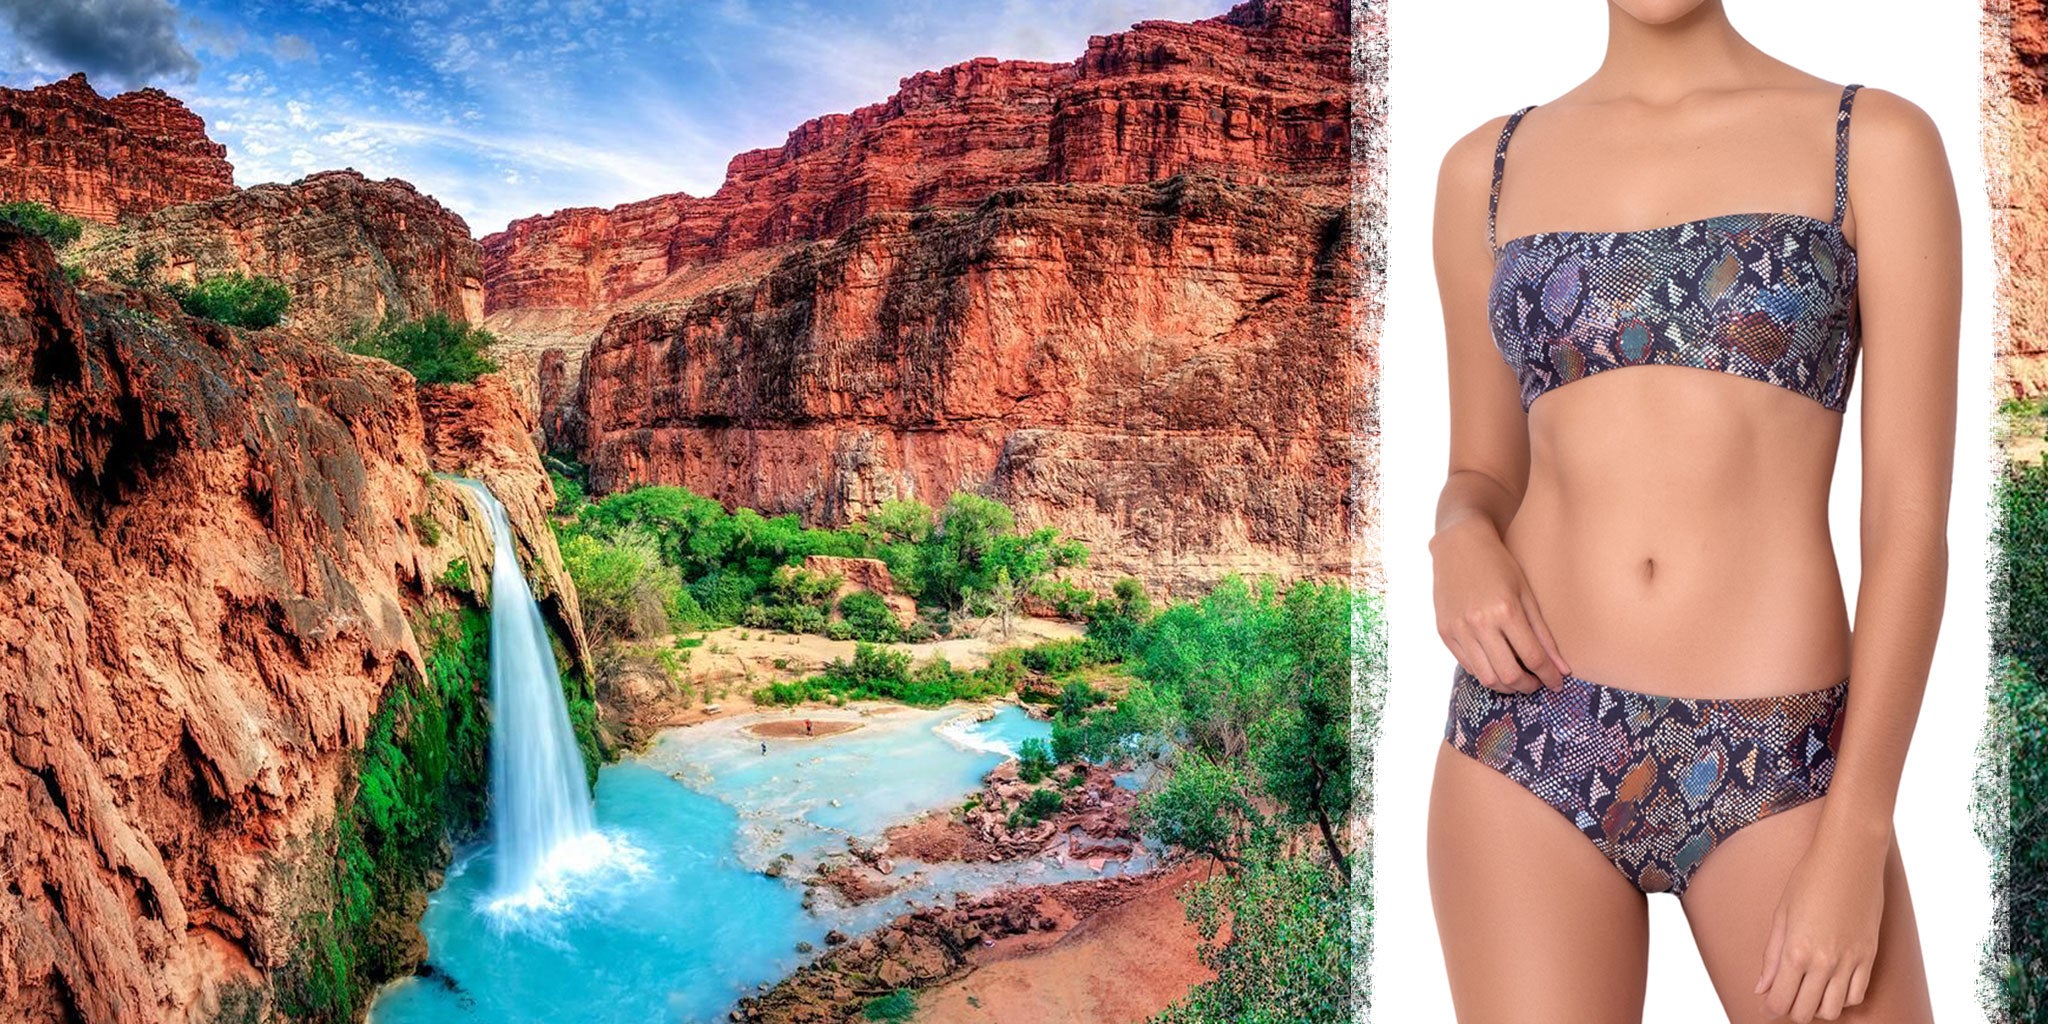 Havasu falls and the Marion bandeau bikini